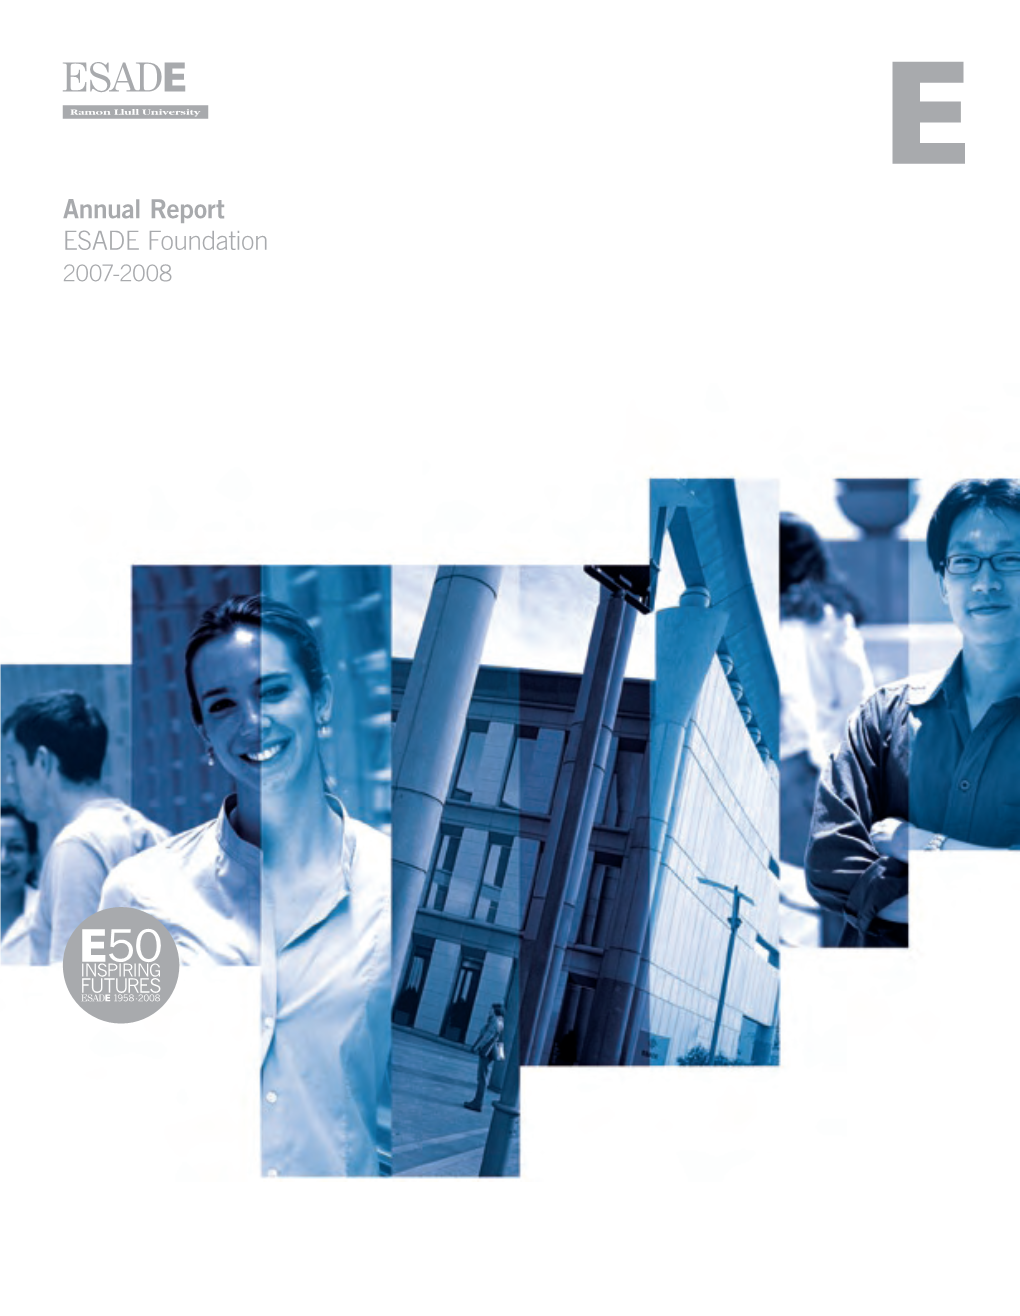 Annual Report ESADE Foundation